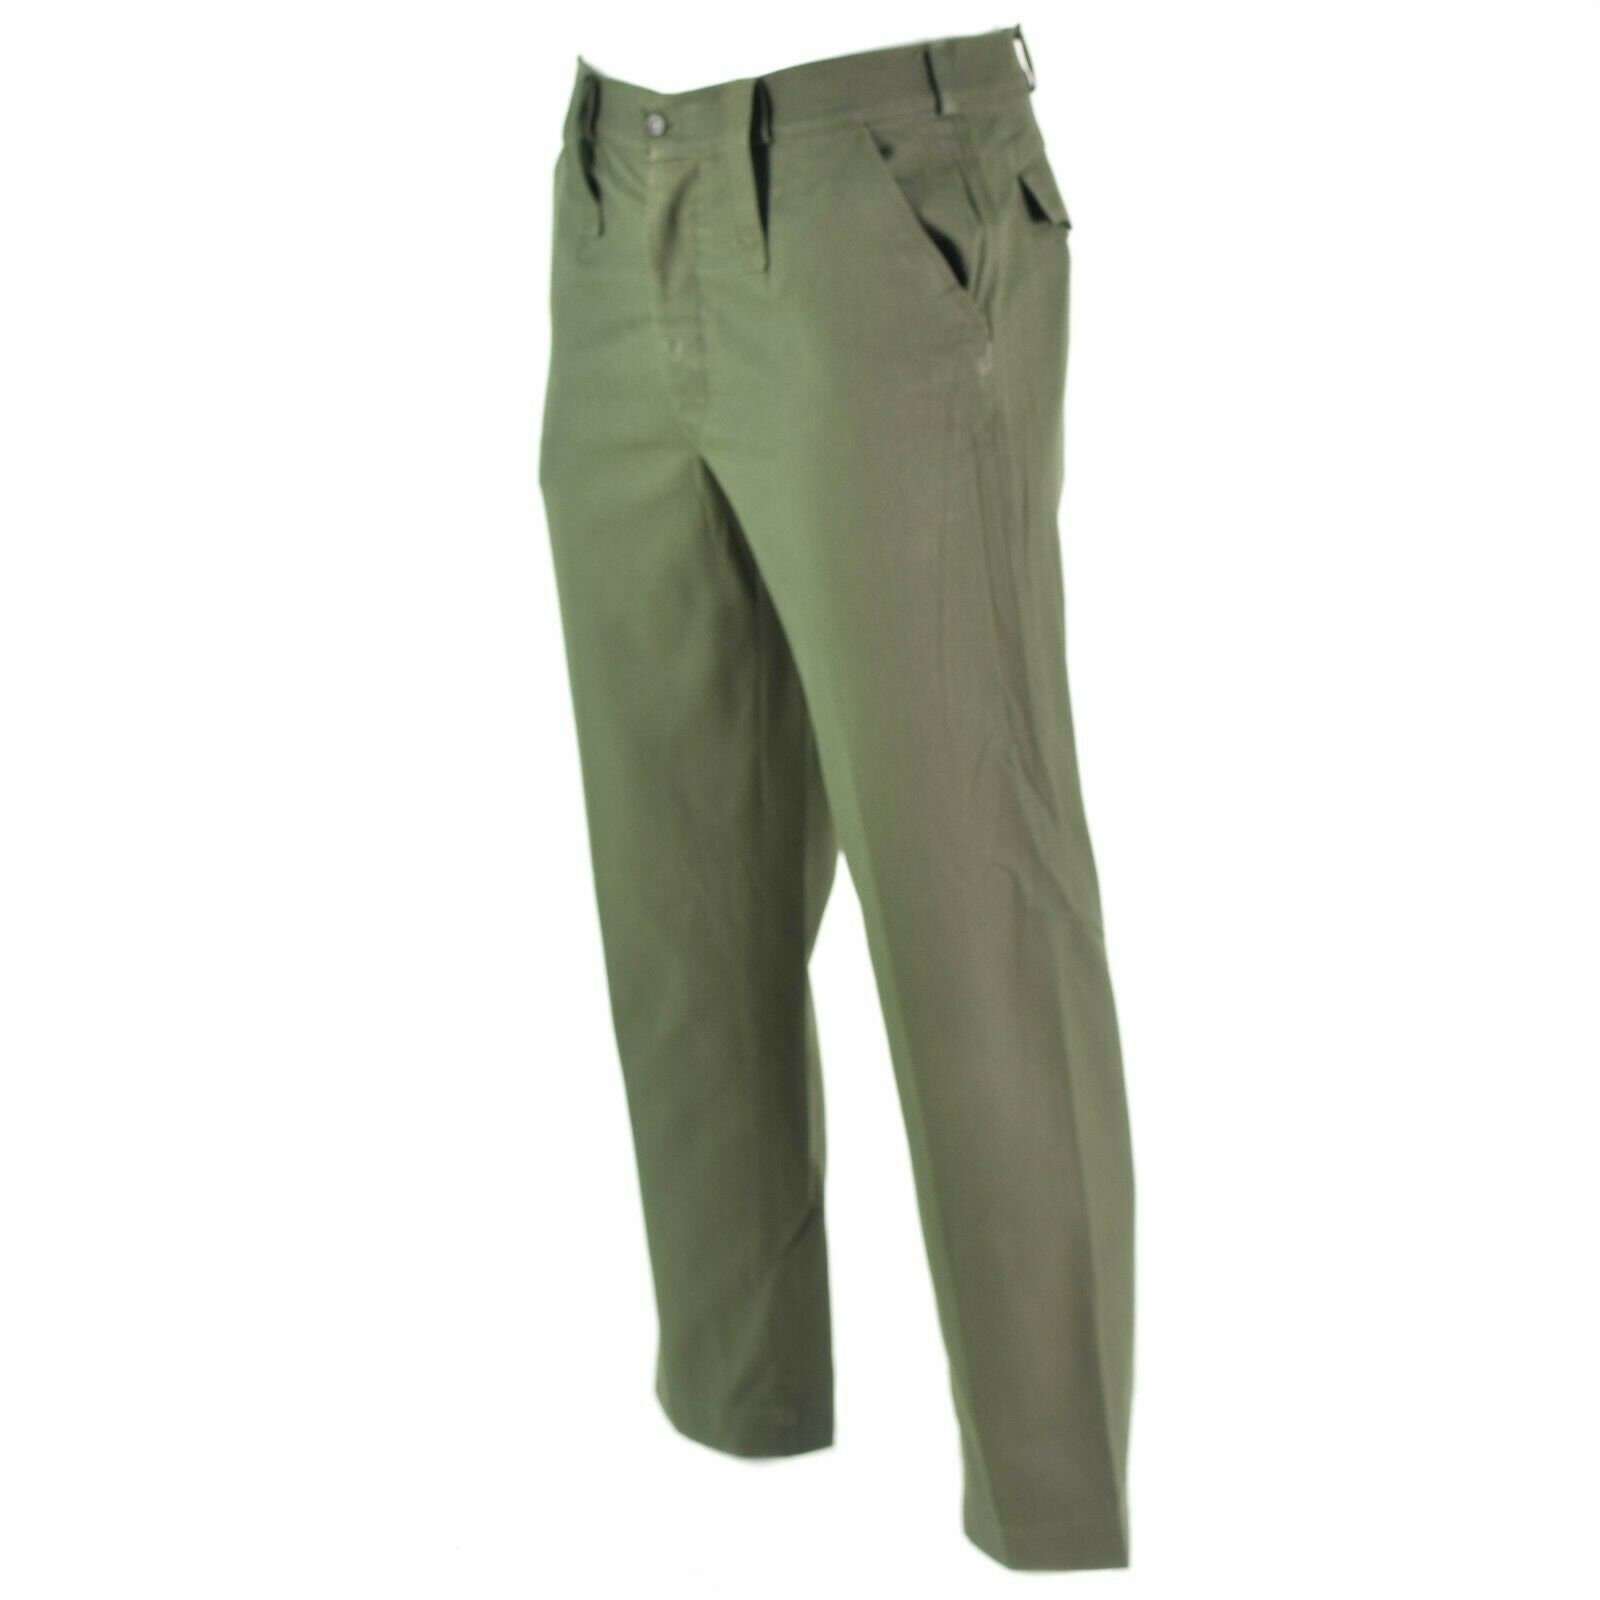 Original Portuguese army field combat pants olive green military pants ...